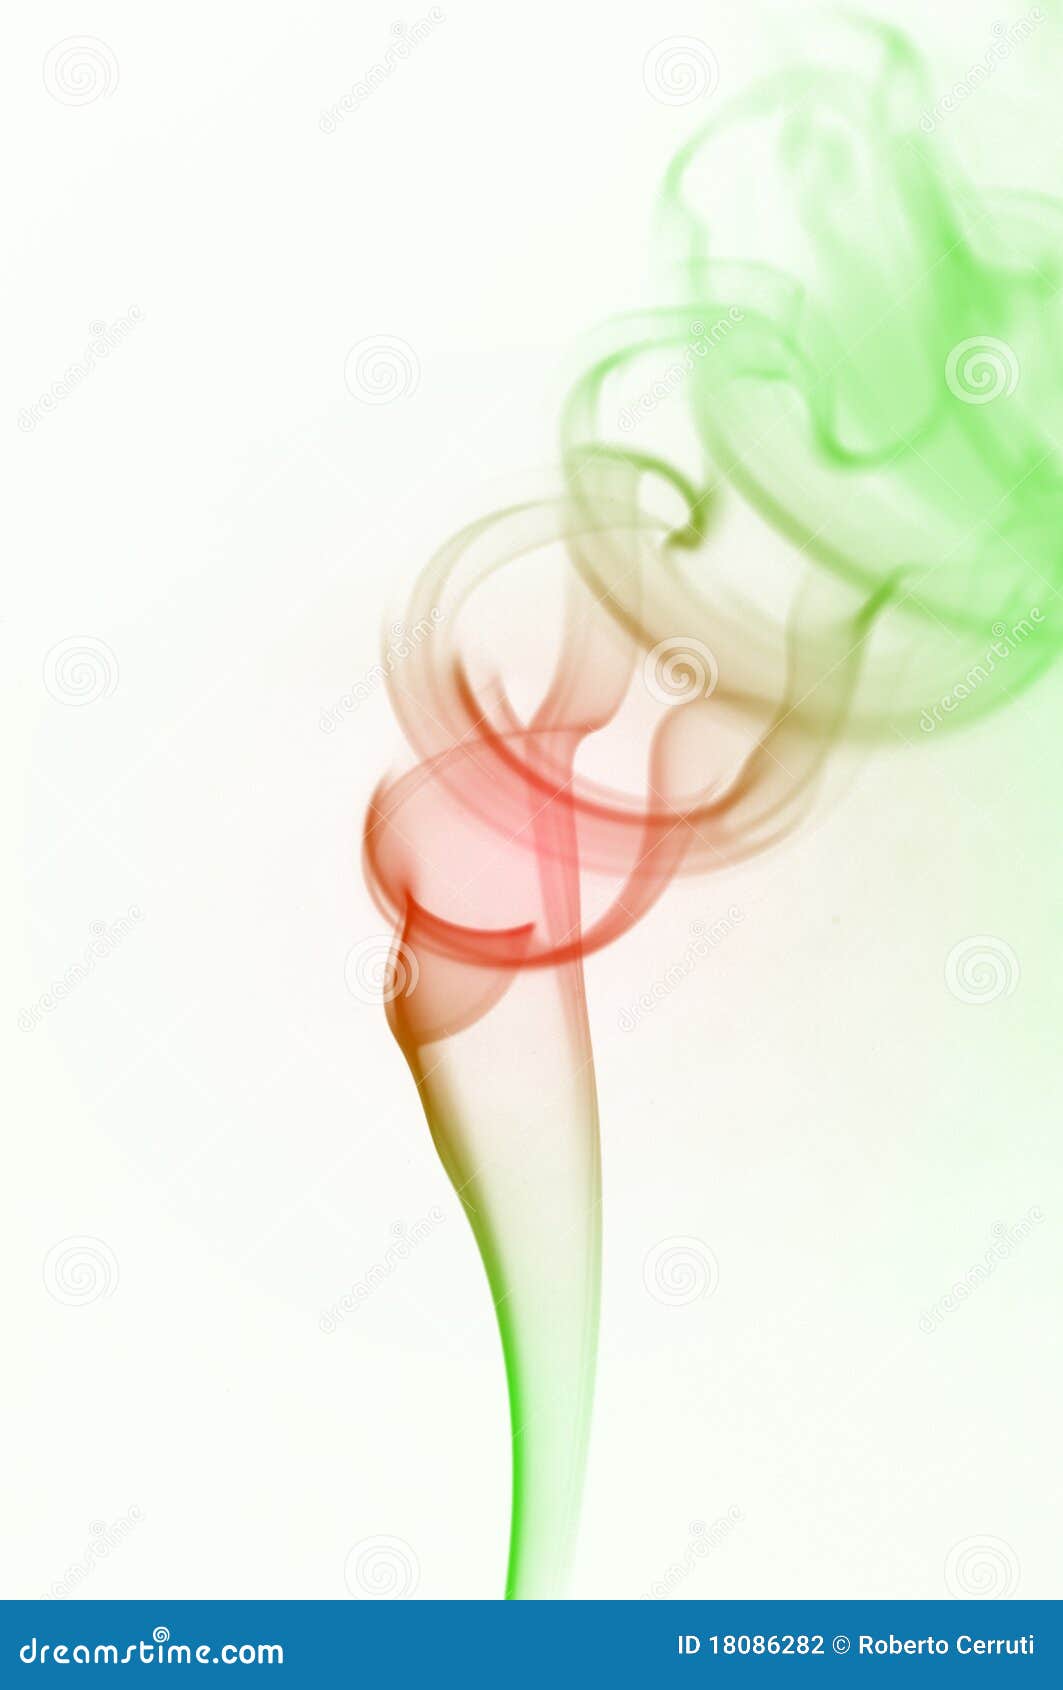 multicolored wisp of smoke on white